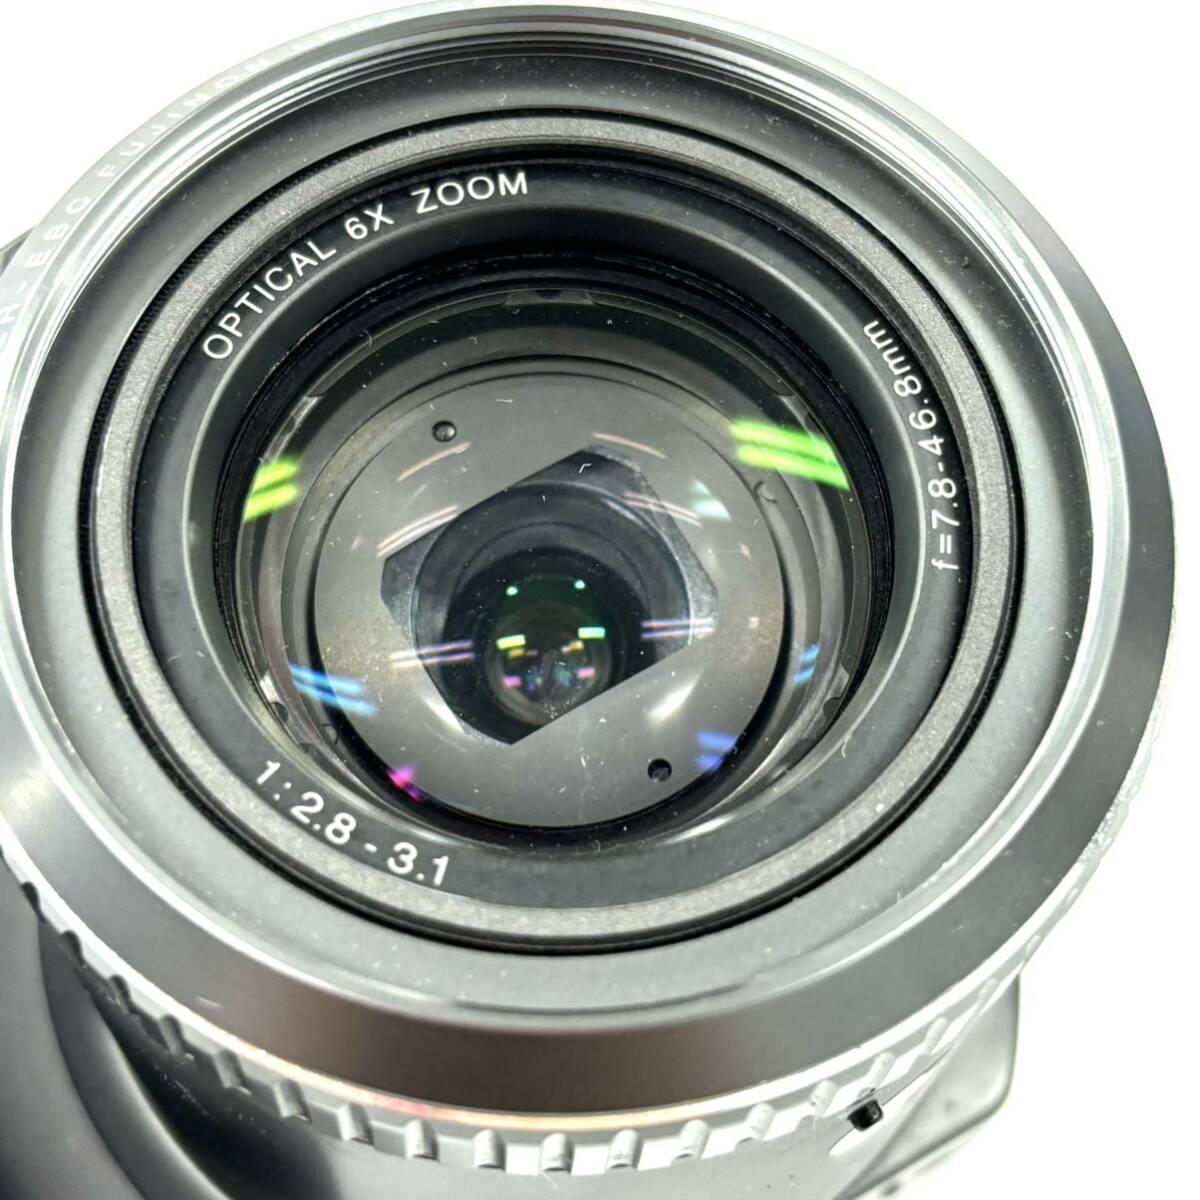 H2877 デジタルカメラ FUJIFILM FinePix 6900Z 13.2× HONEYCOM ZOOM SUPER-EBC FUJINON LENS OPTICAL 1:2.8-3.1 f＝7.8-46.8mm 中古の画像9